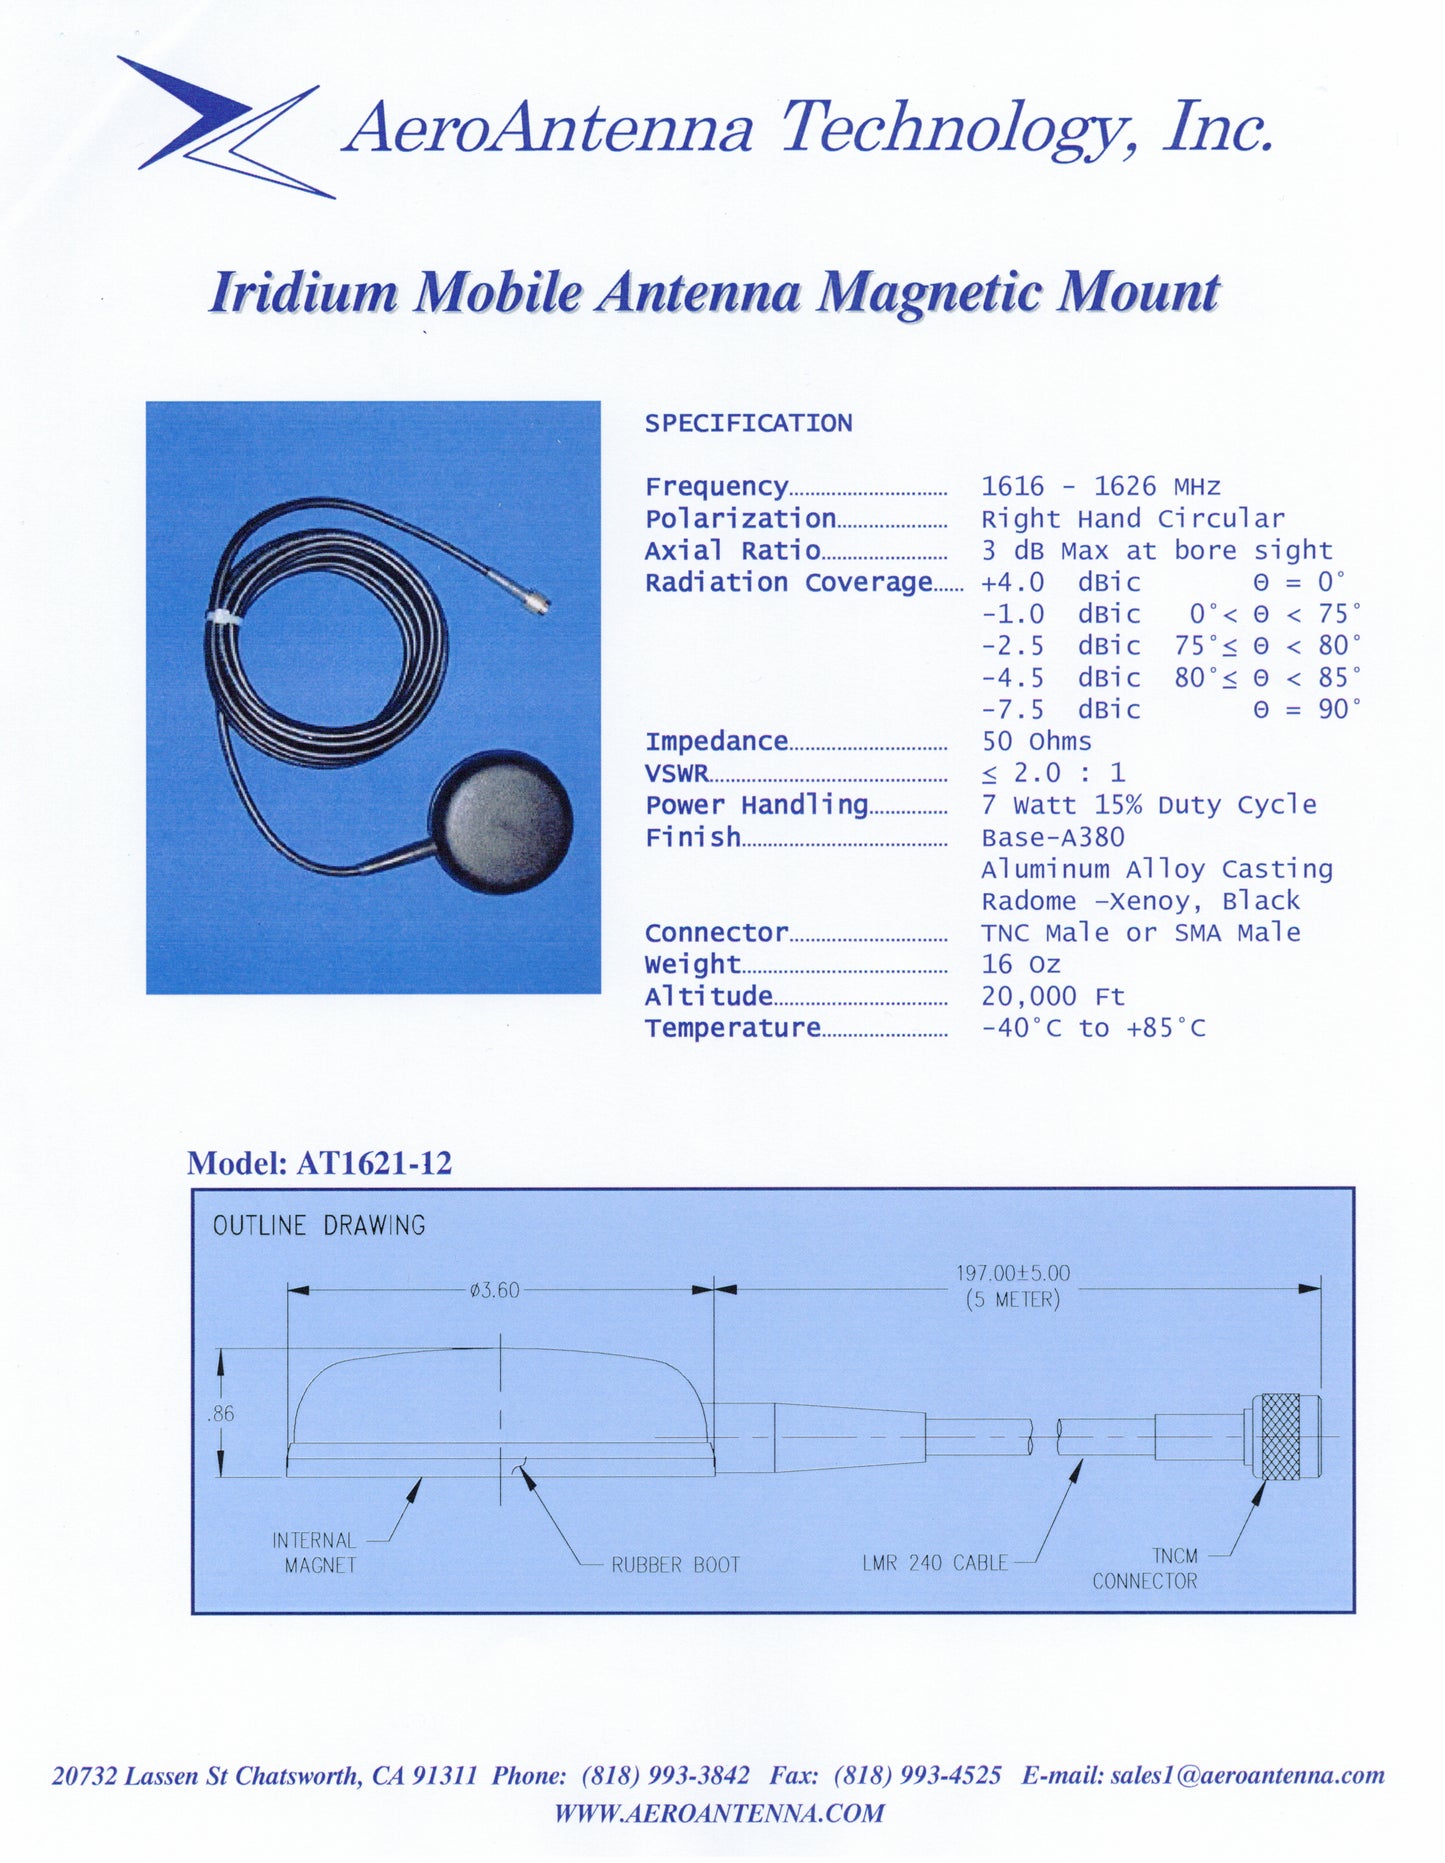 Antena móvil Iridium - Antena de montaje magnético